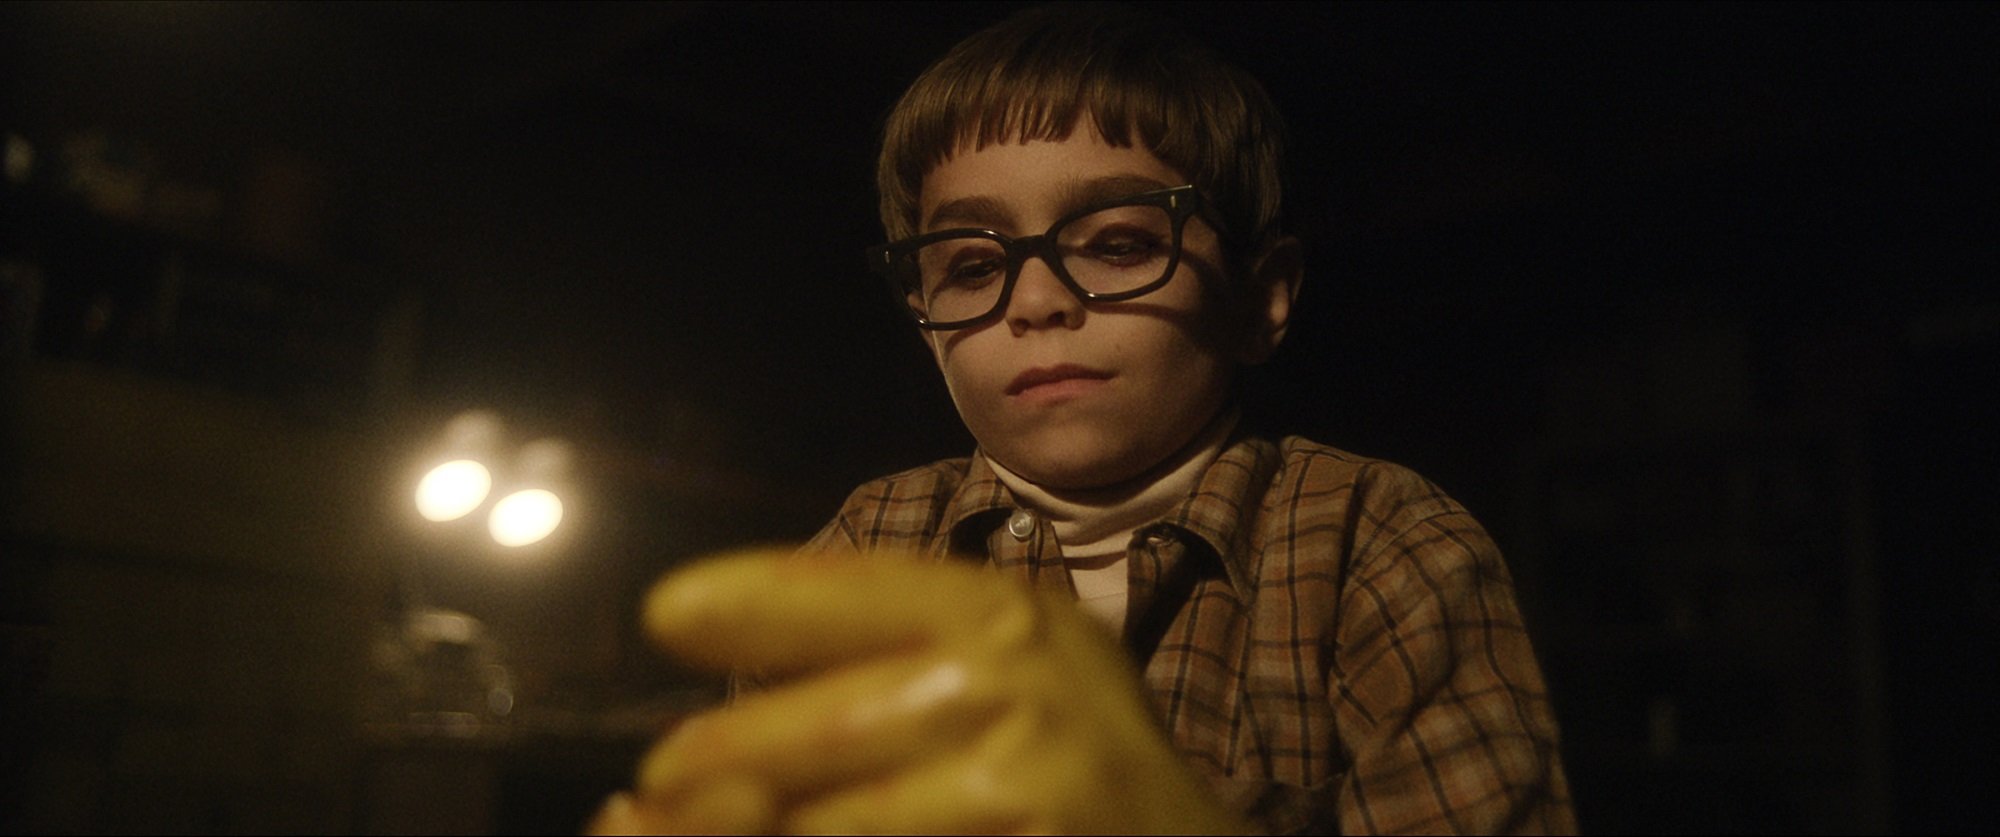 'Dahmer - Monster: The Jeffrey Dahmer Story': Nick Fisher as Jeffrey Dahmer as a young boy